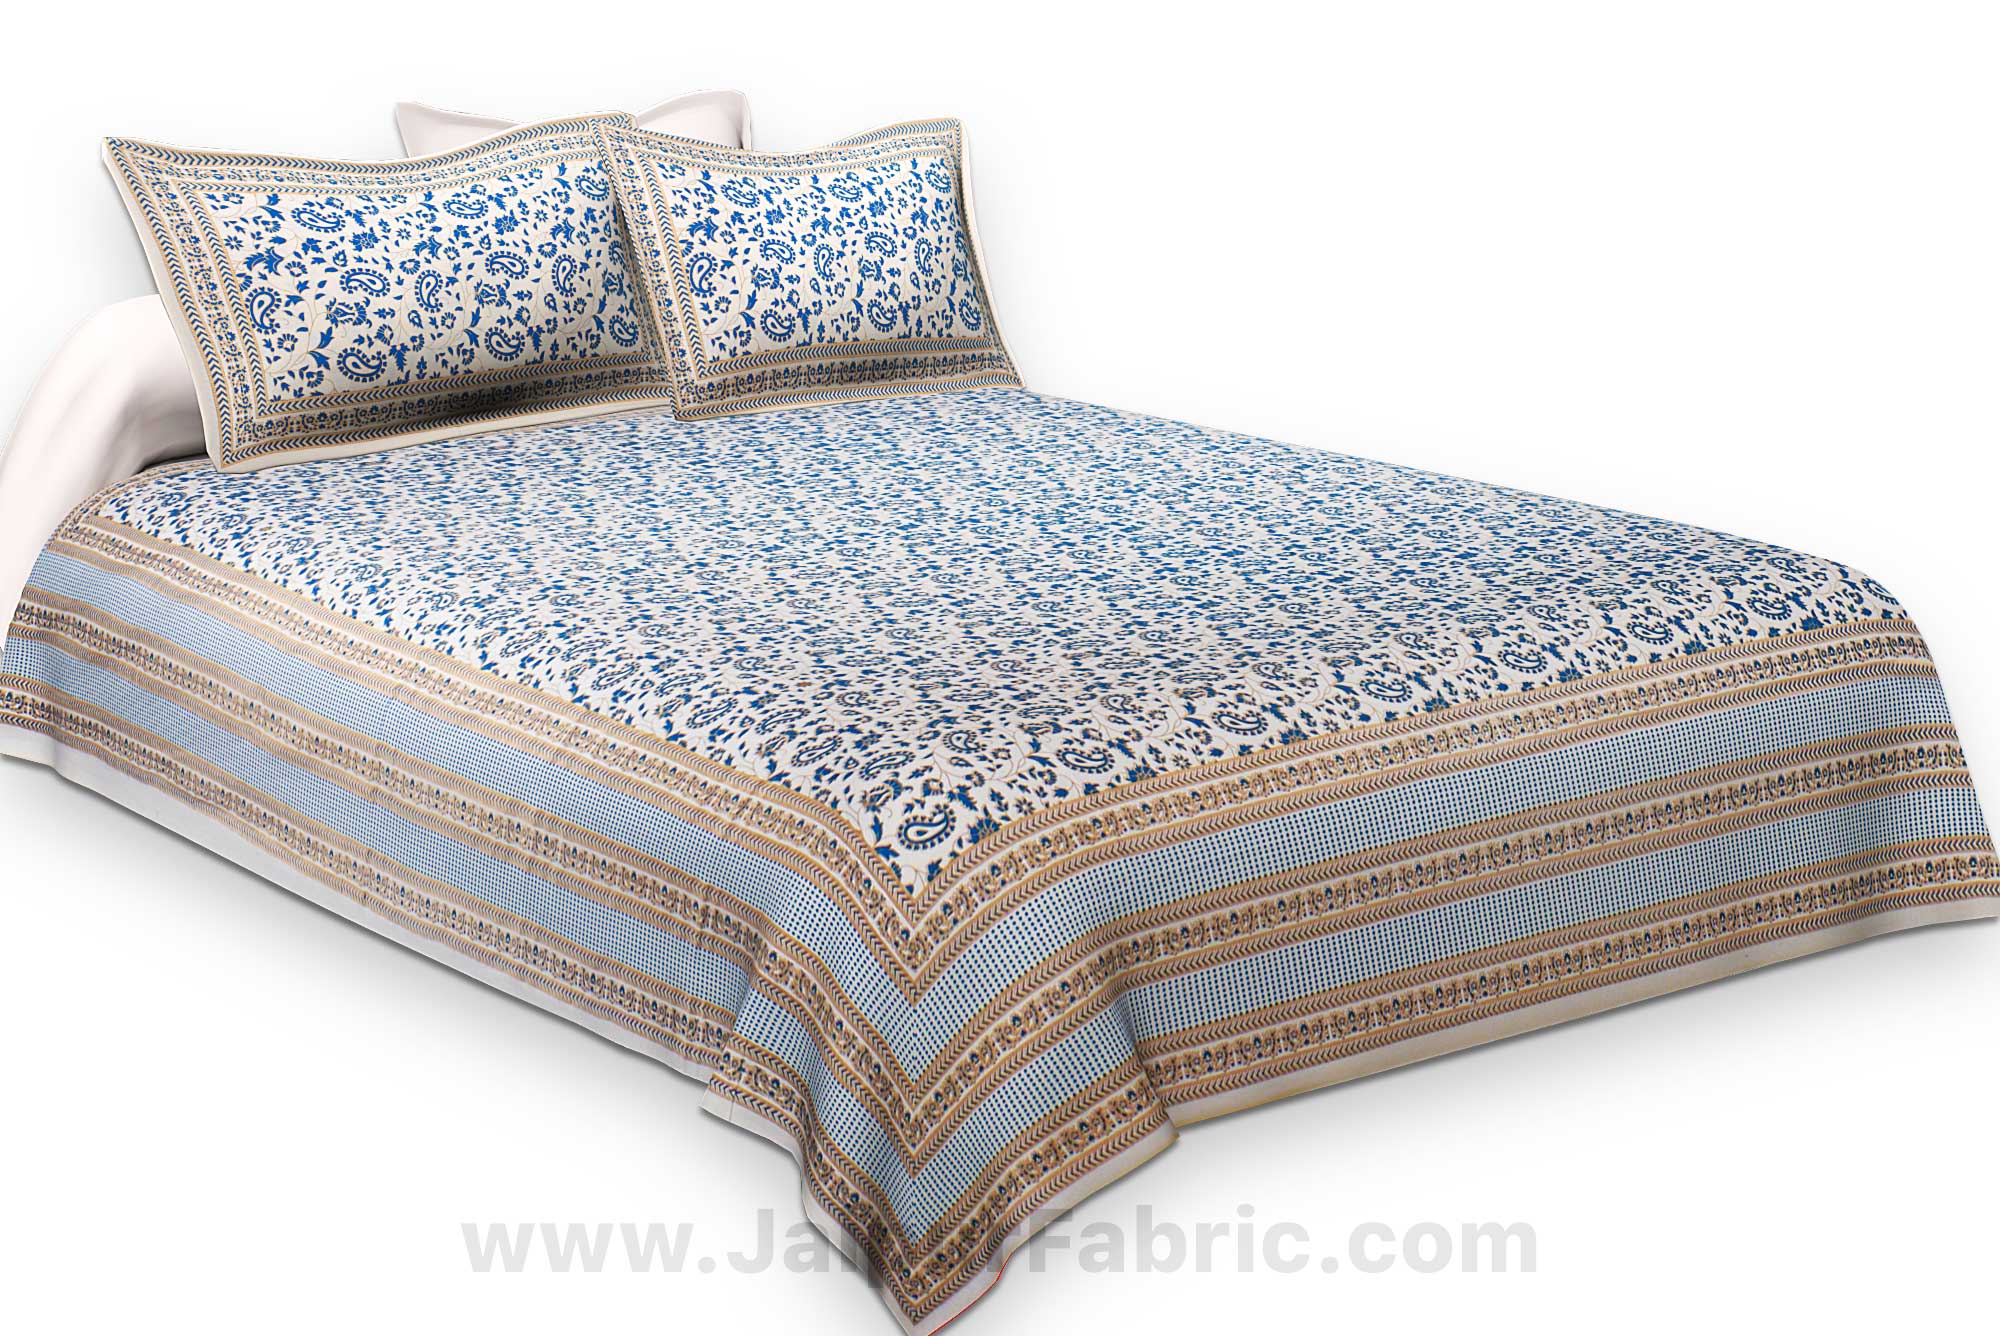 Ethnic Gold Royal Blue Floral Double Bedsheet